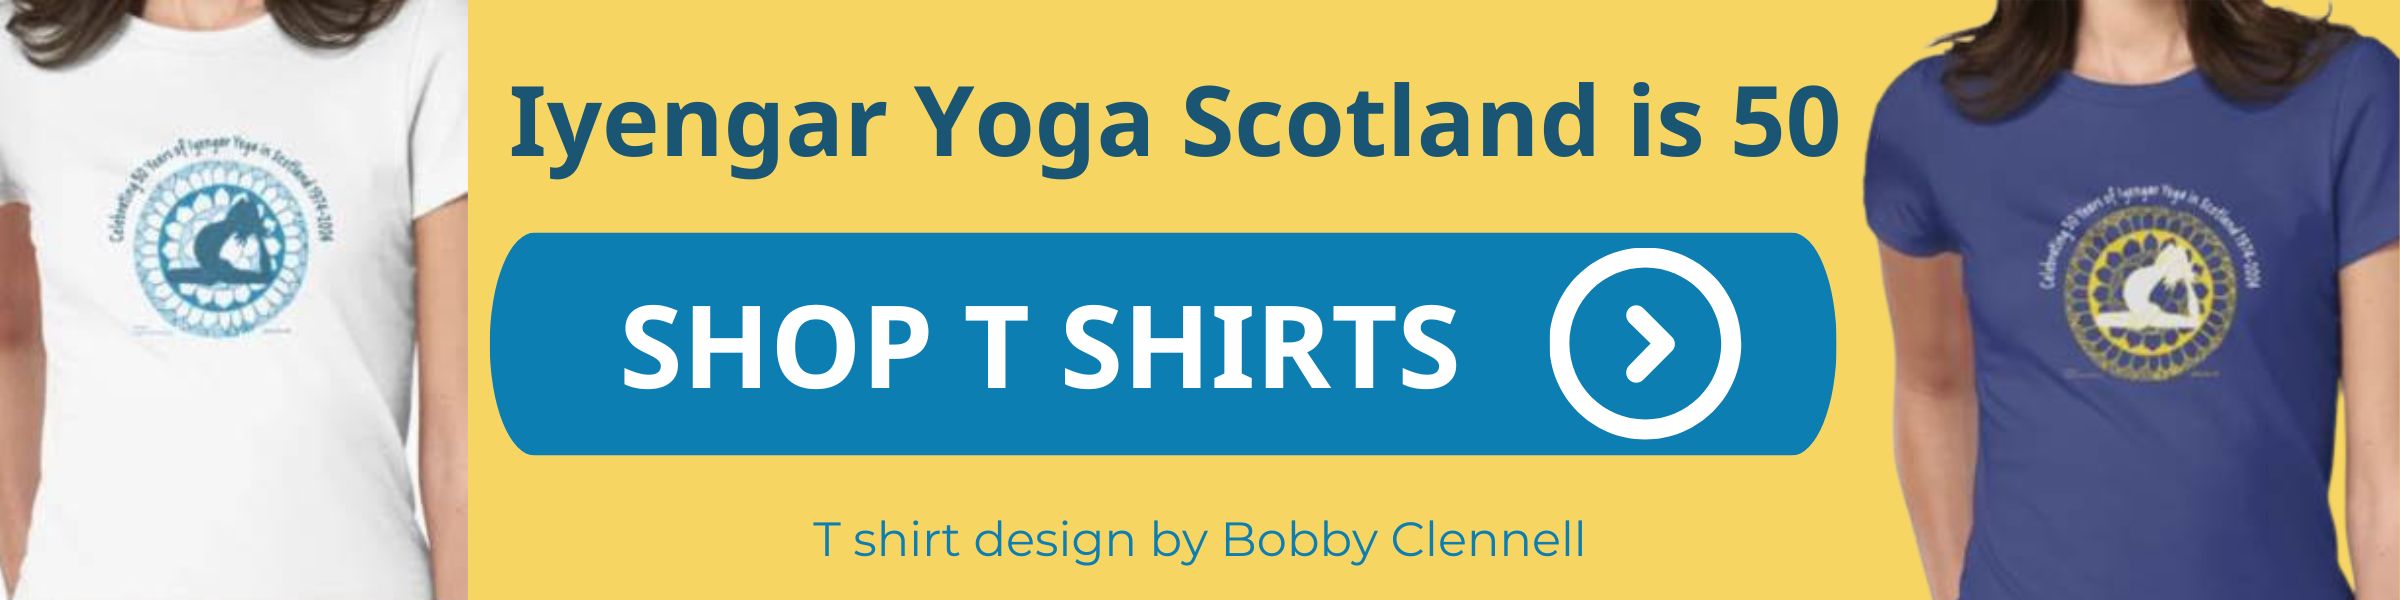 Shop T shirts Iyengar Yoga Scotland is 50